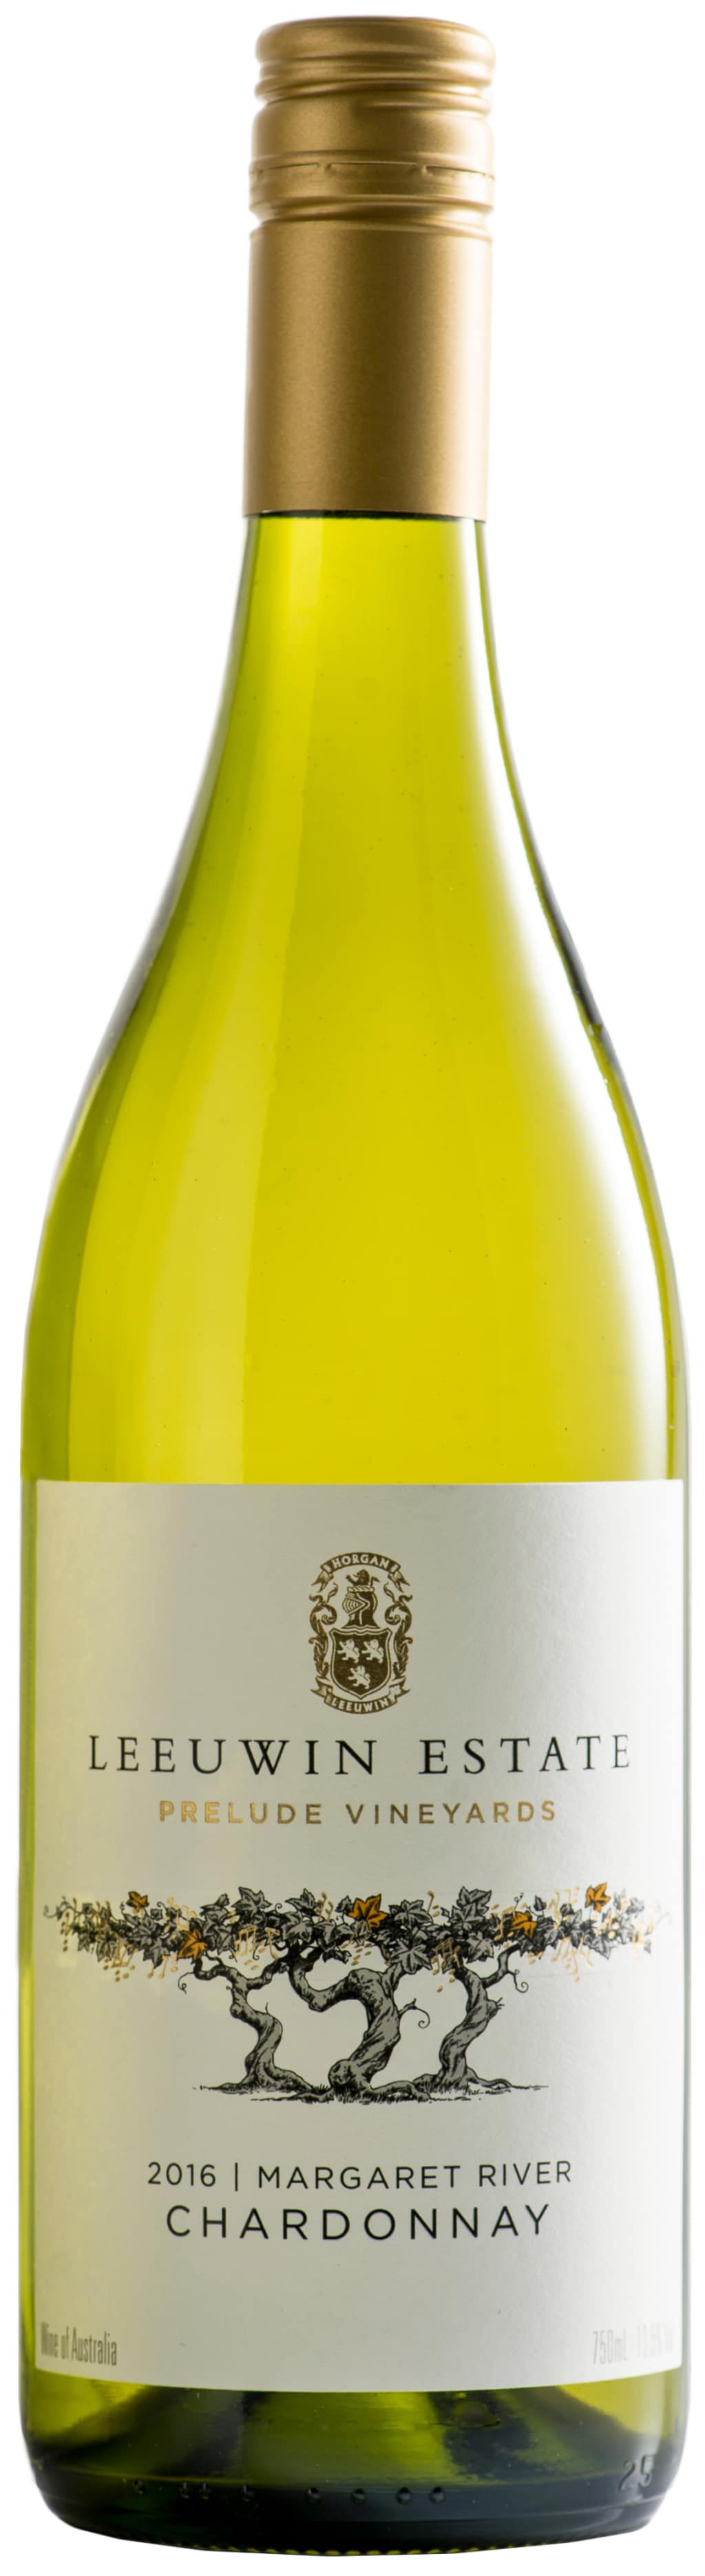 Leeuwin Estate Chardonnay Prelude Vineyards 2016